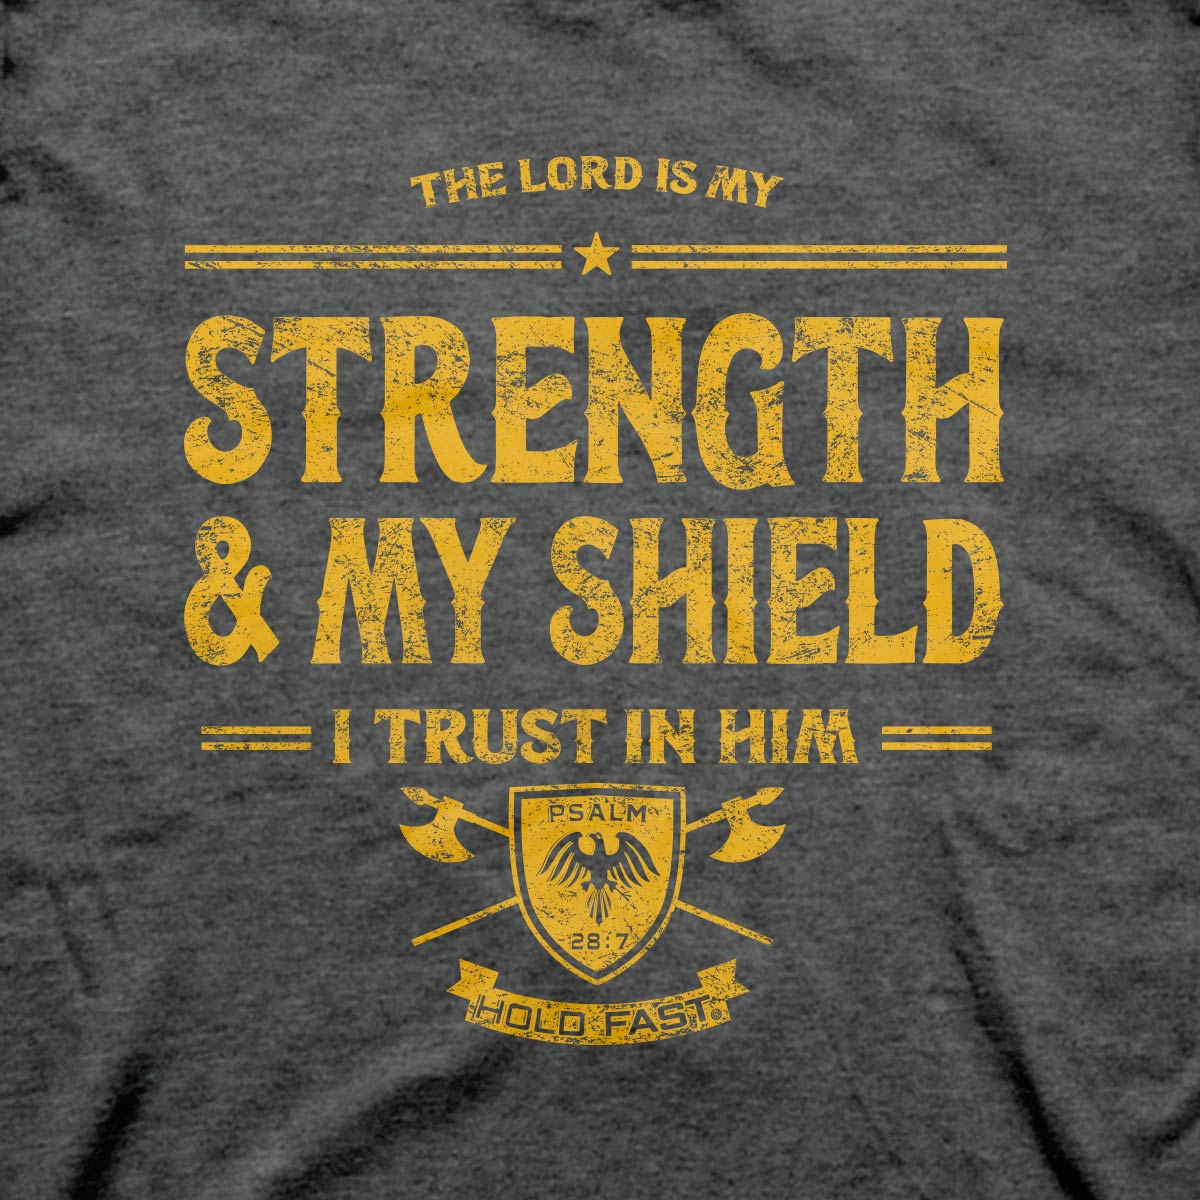 Strength & Shield Mens T-Shirt